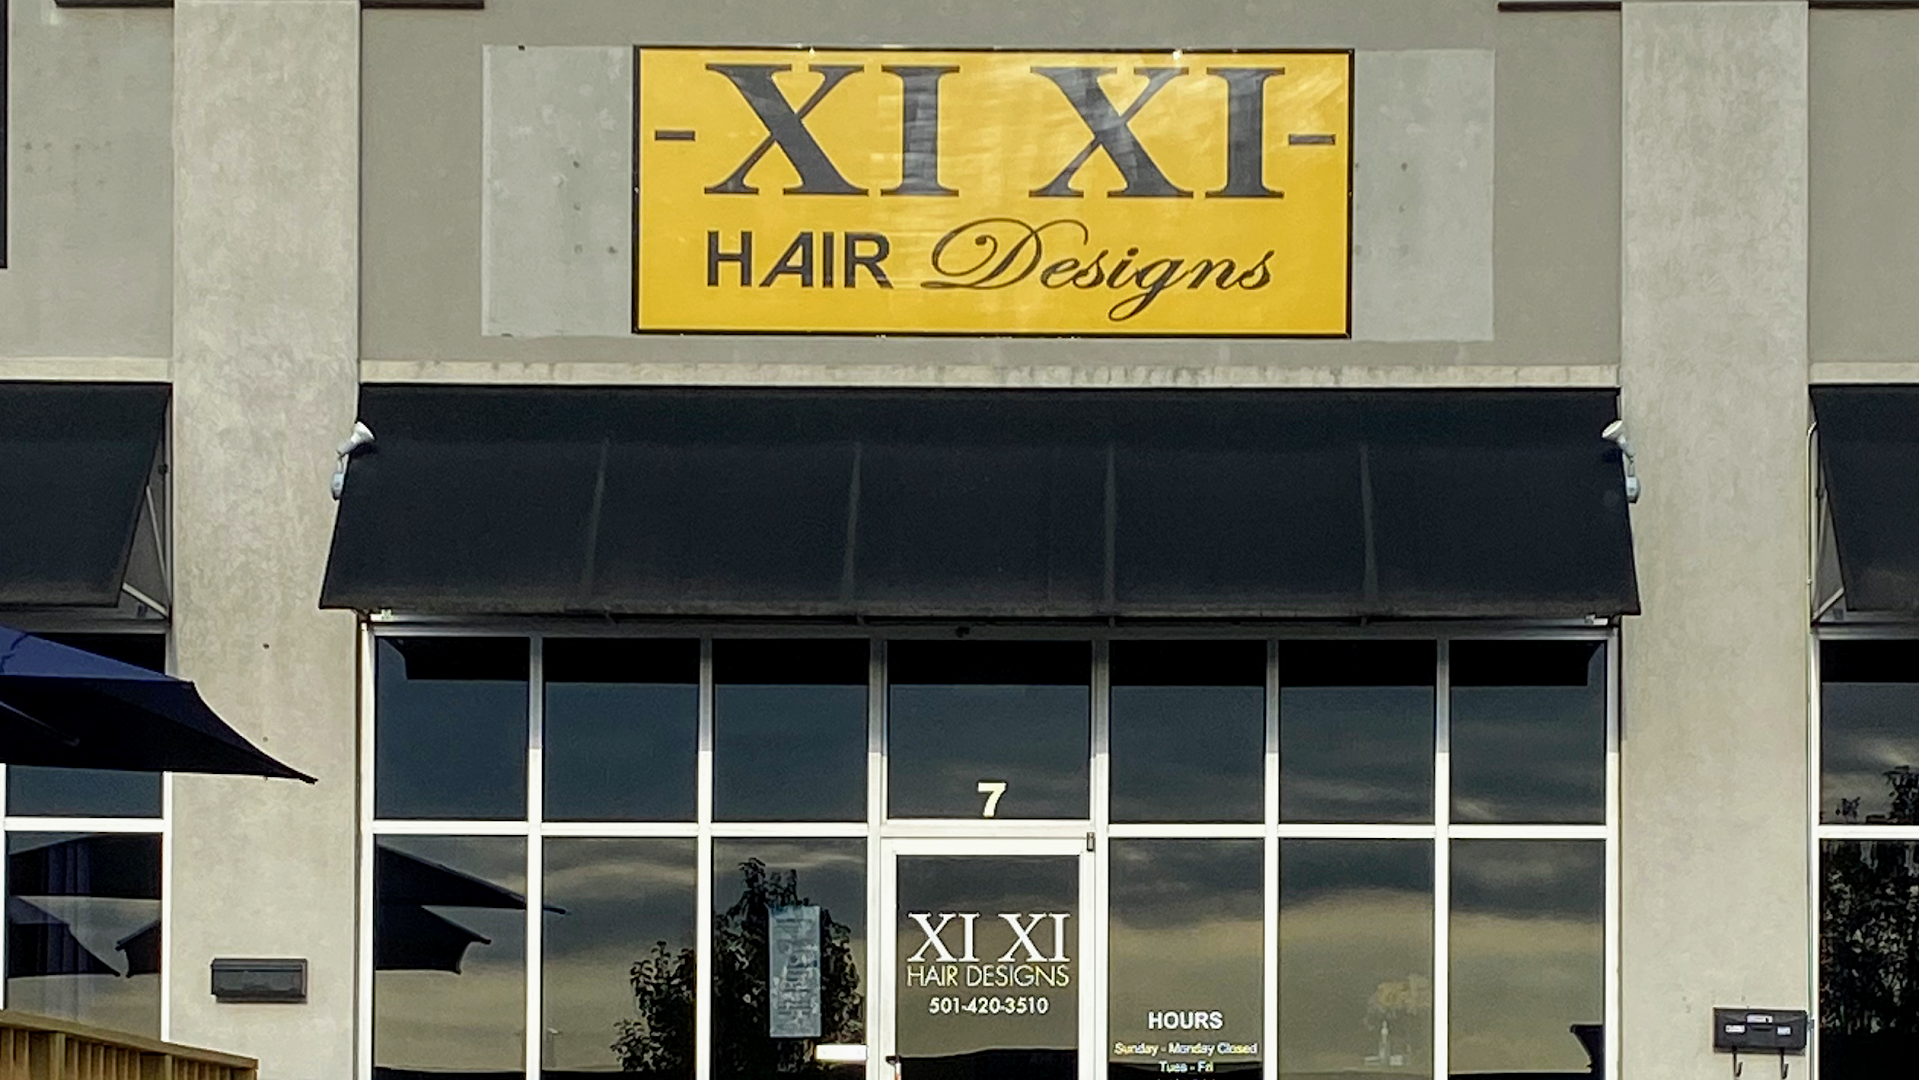 XI XI HAIR DESIGNS, LLC.